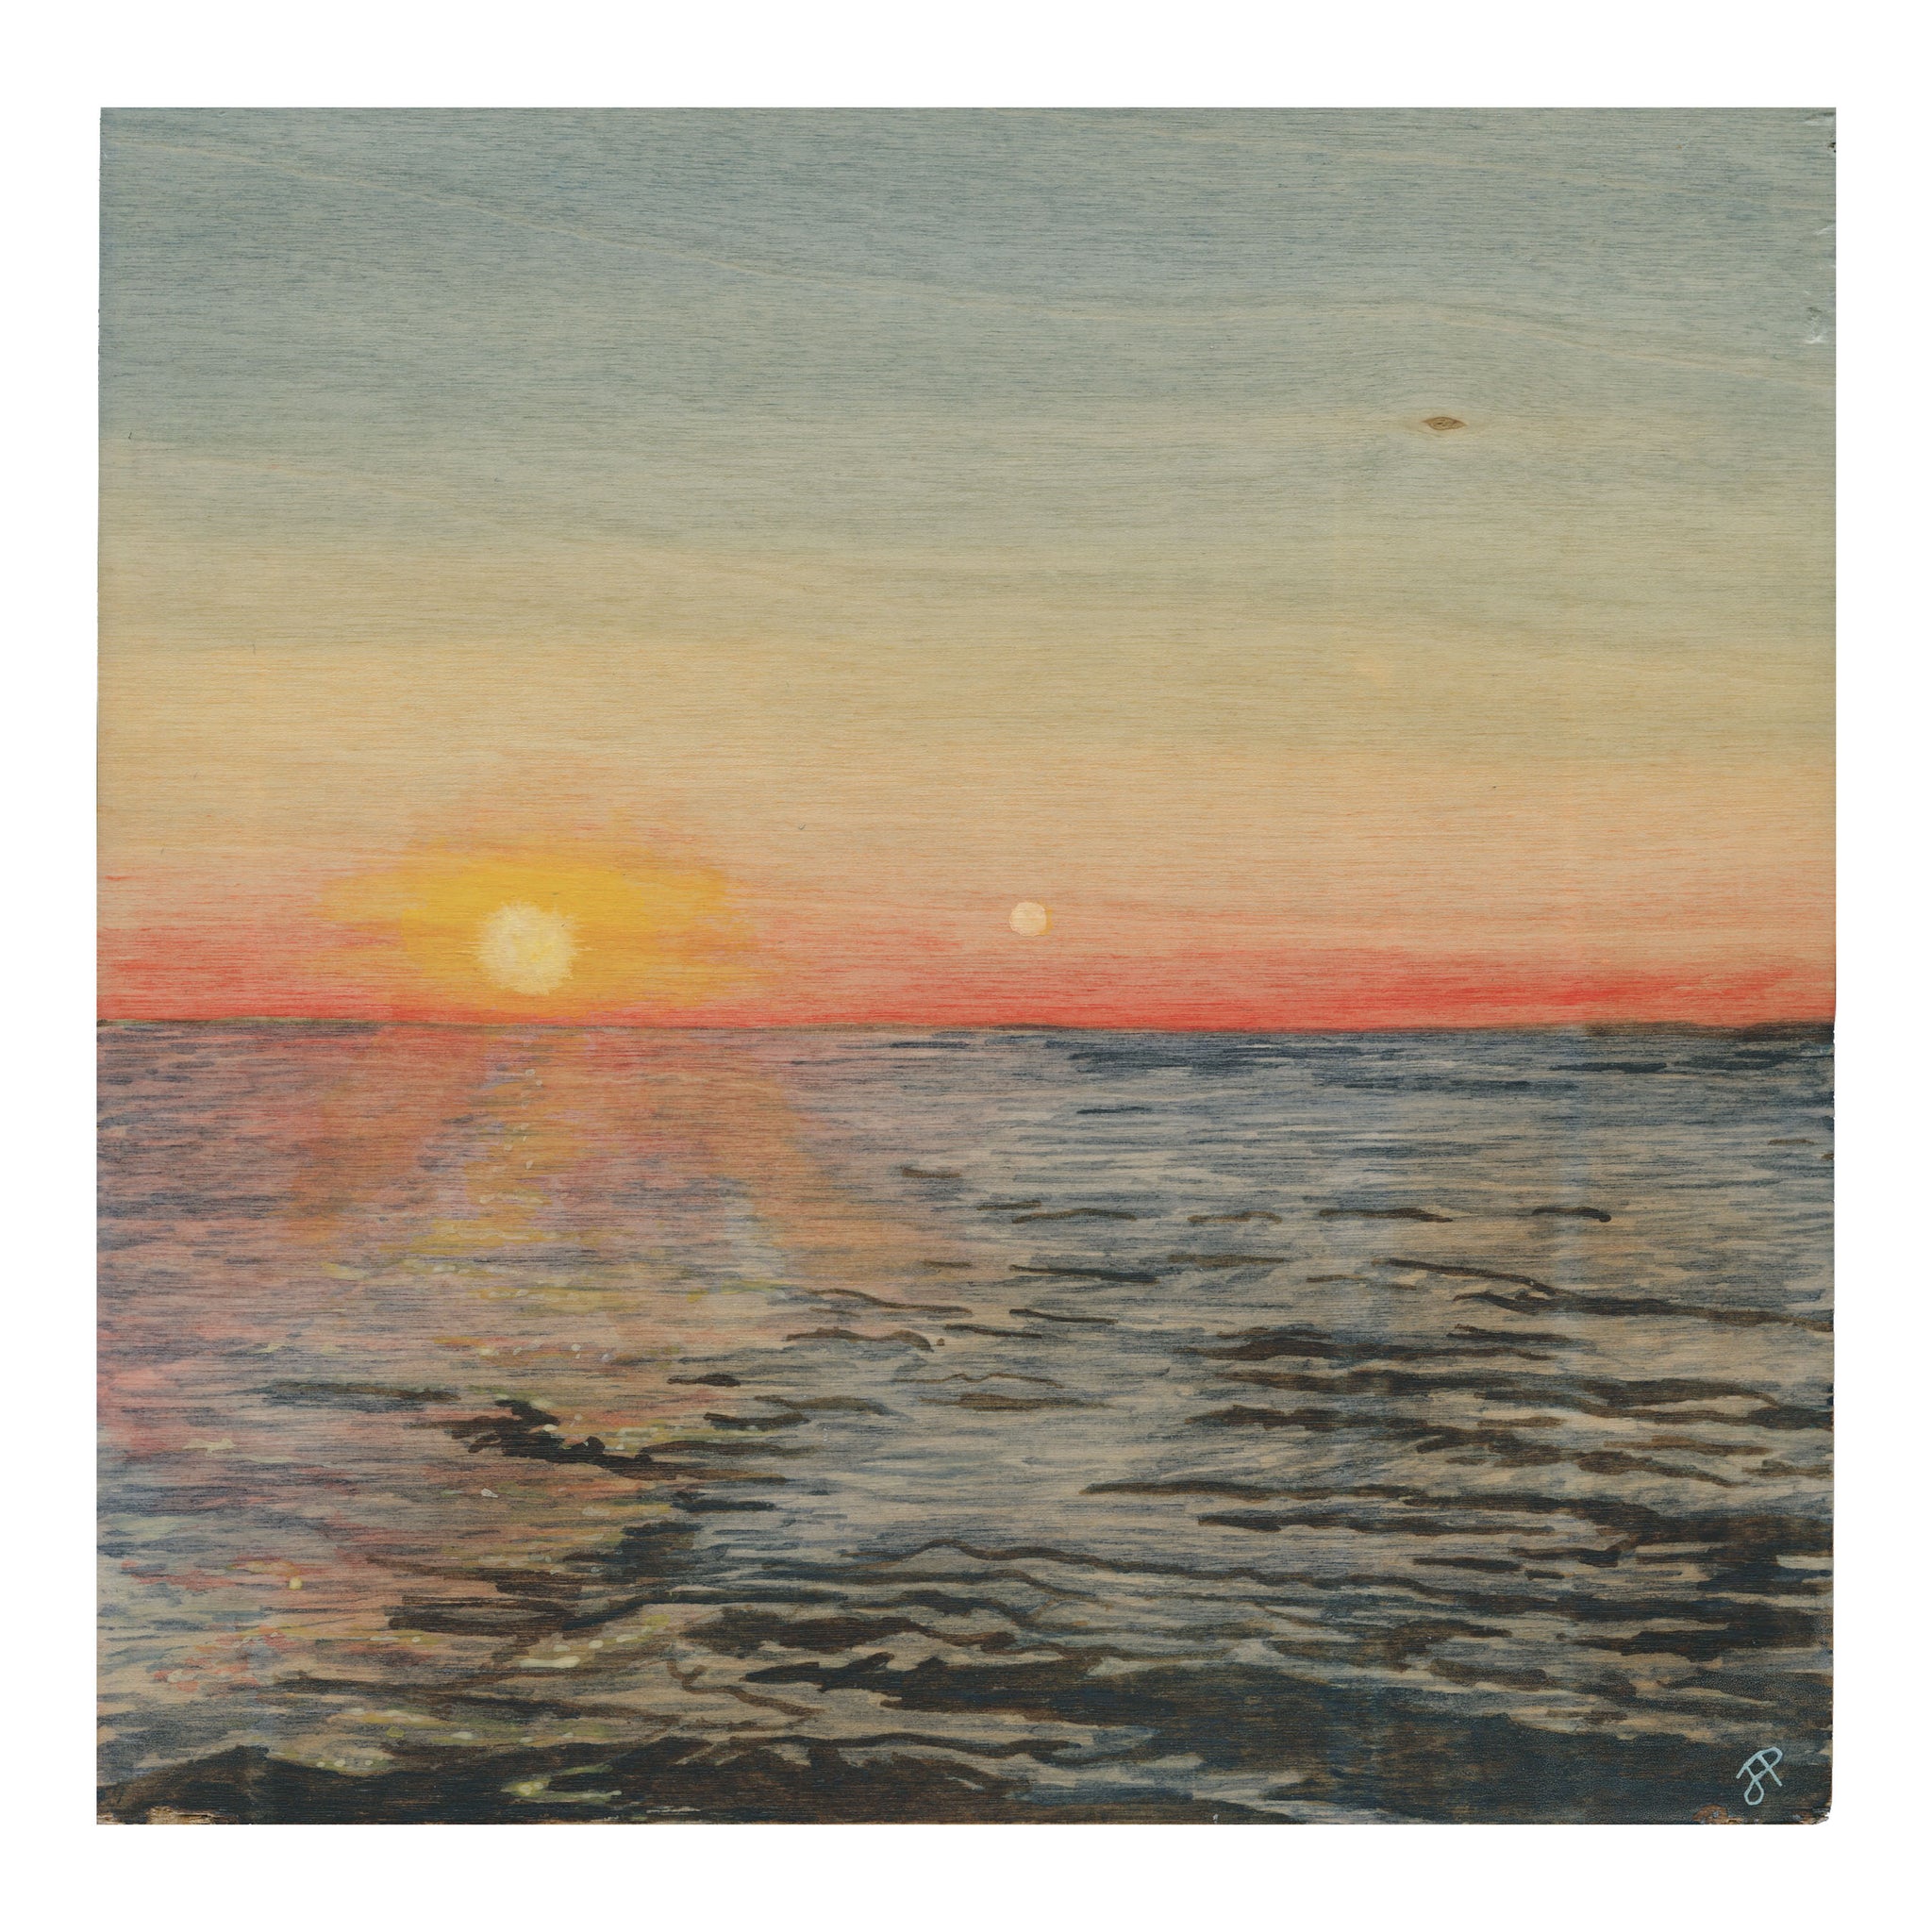 Print - "Michigan Sunset" Giclee Fine Art Print on Cardstock -Open Edition Print